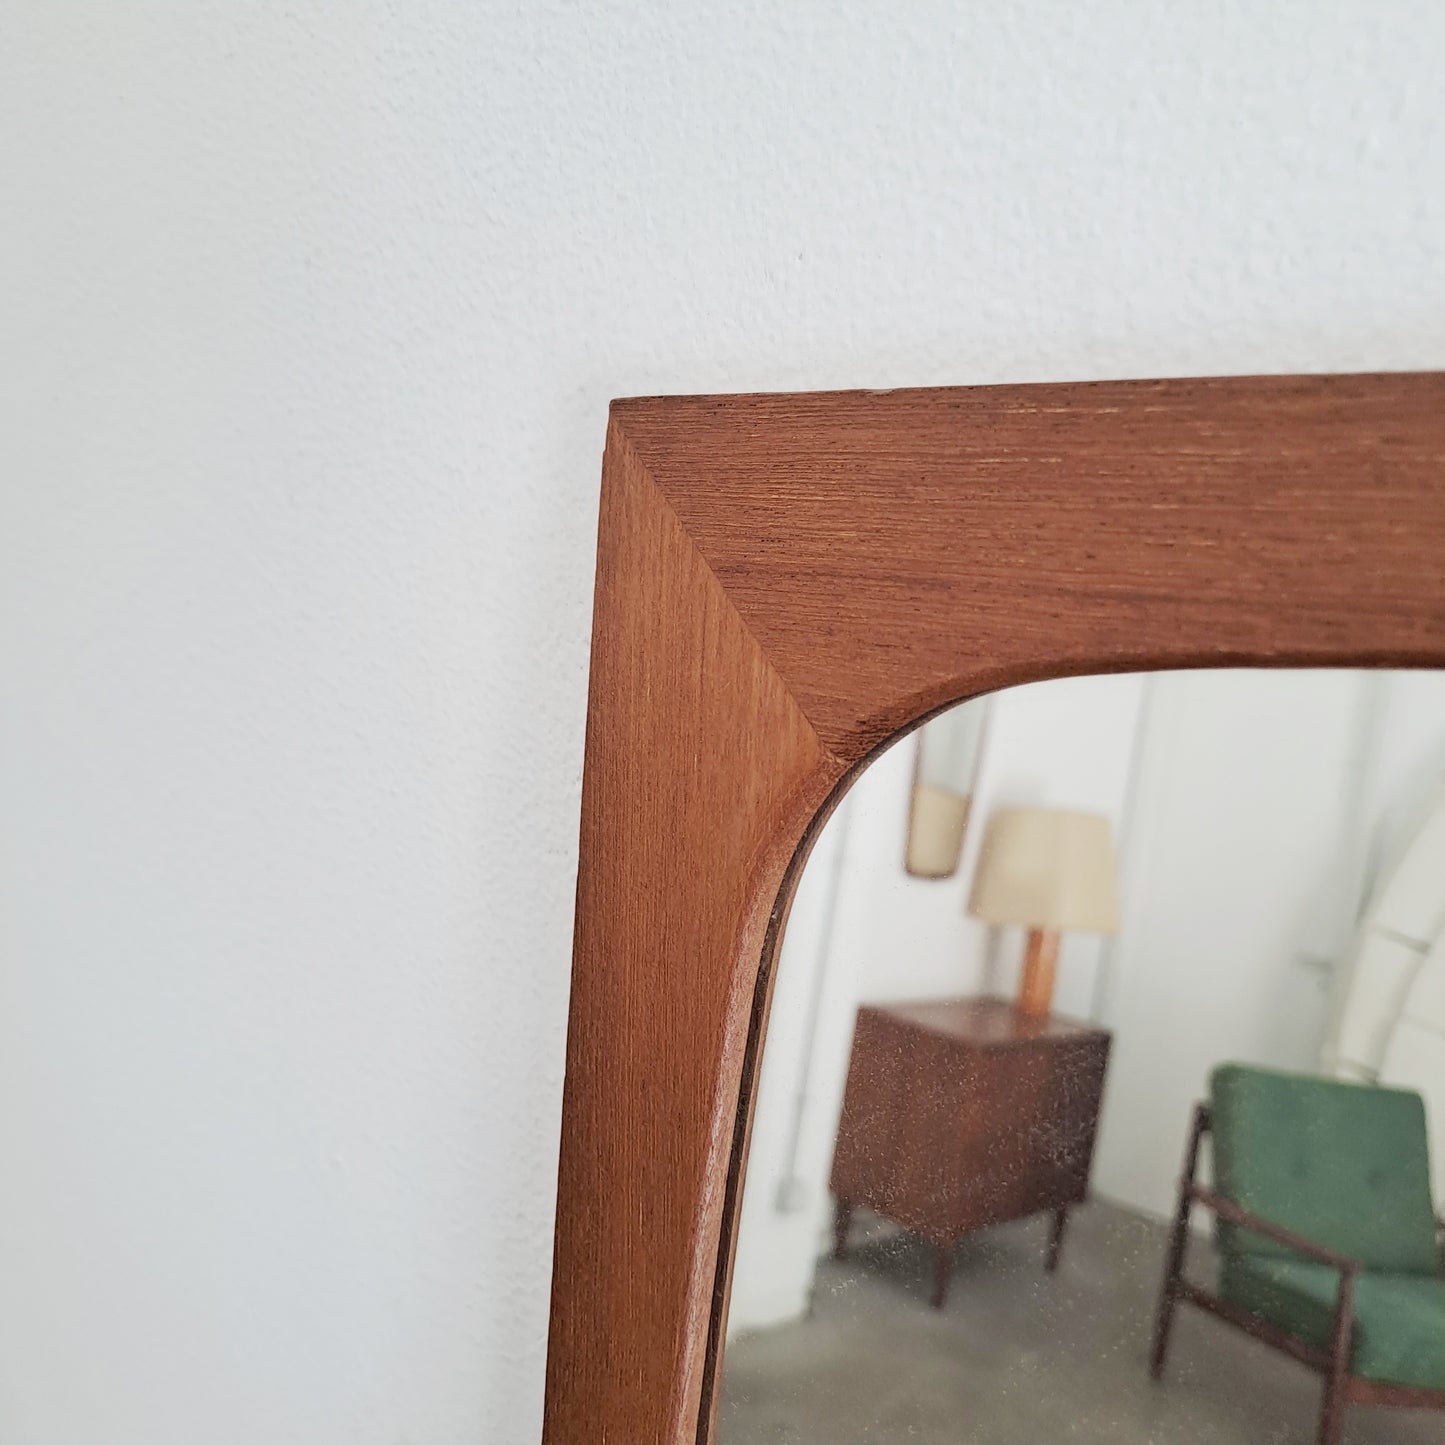 Specchio vintage design danese originale anni 50 [74st8]